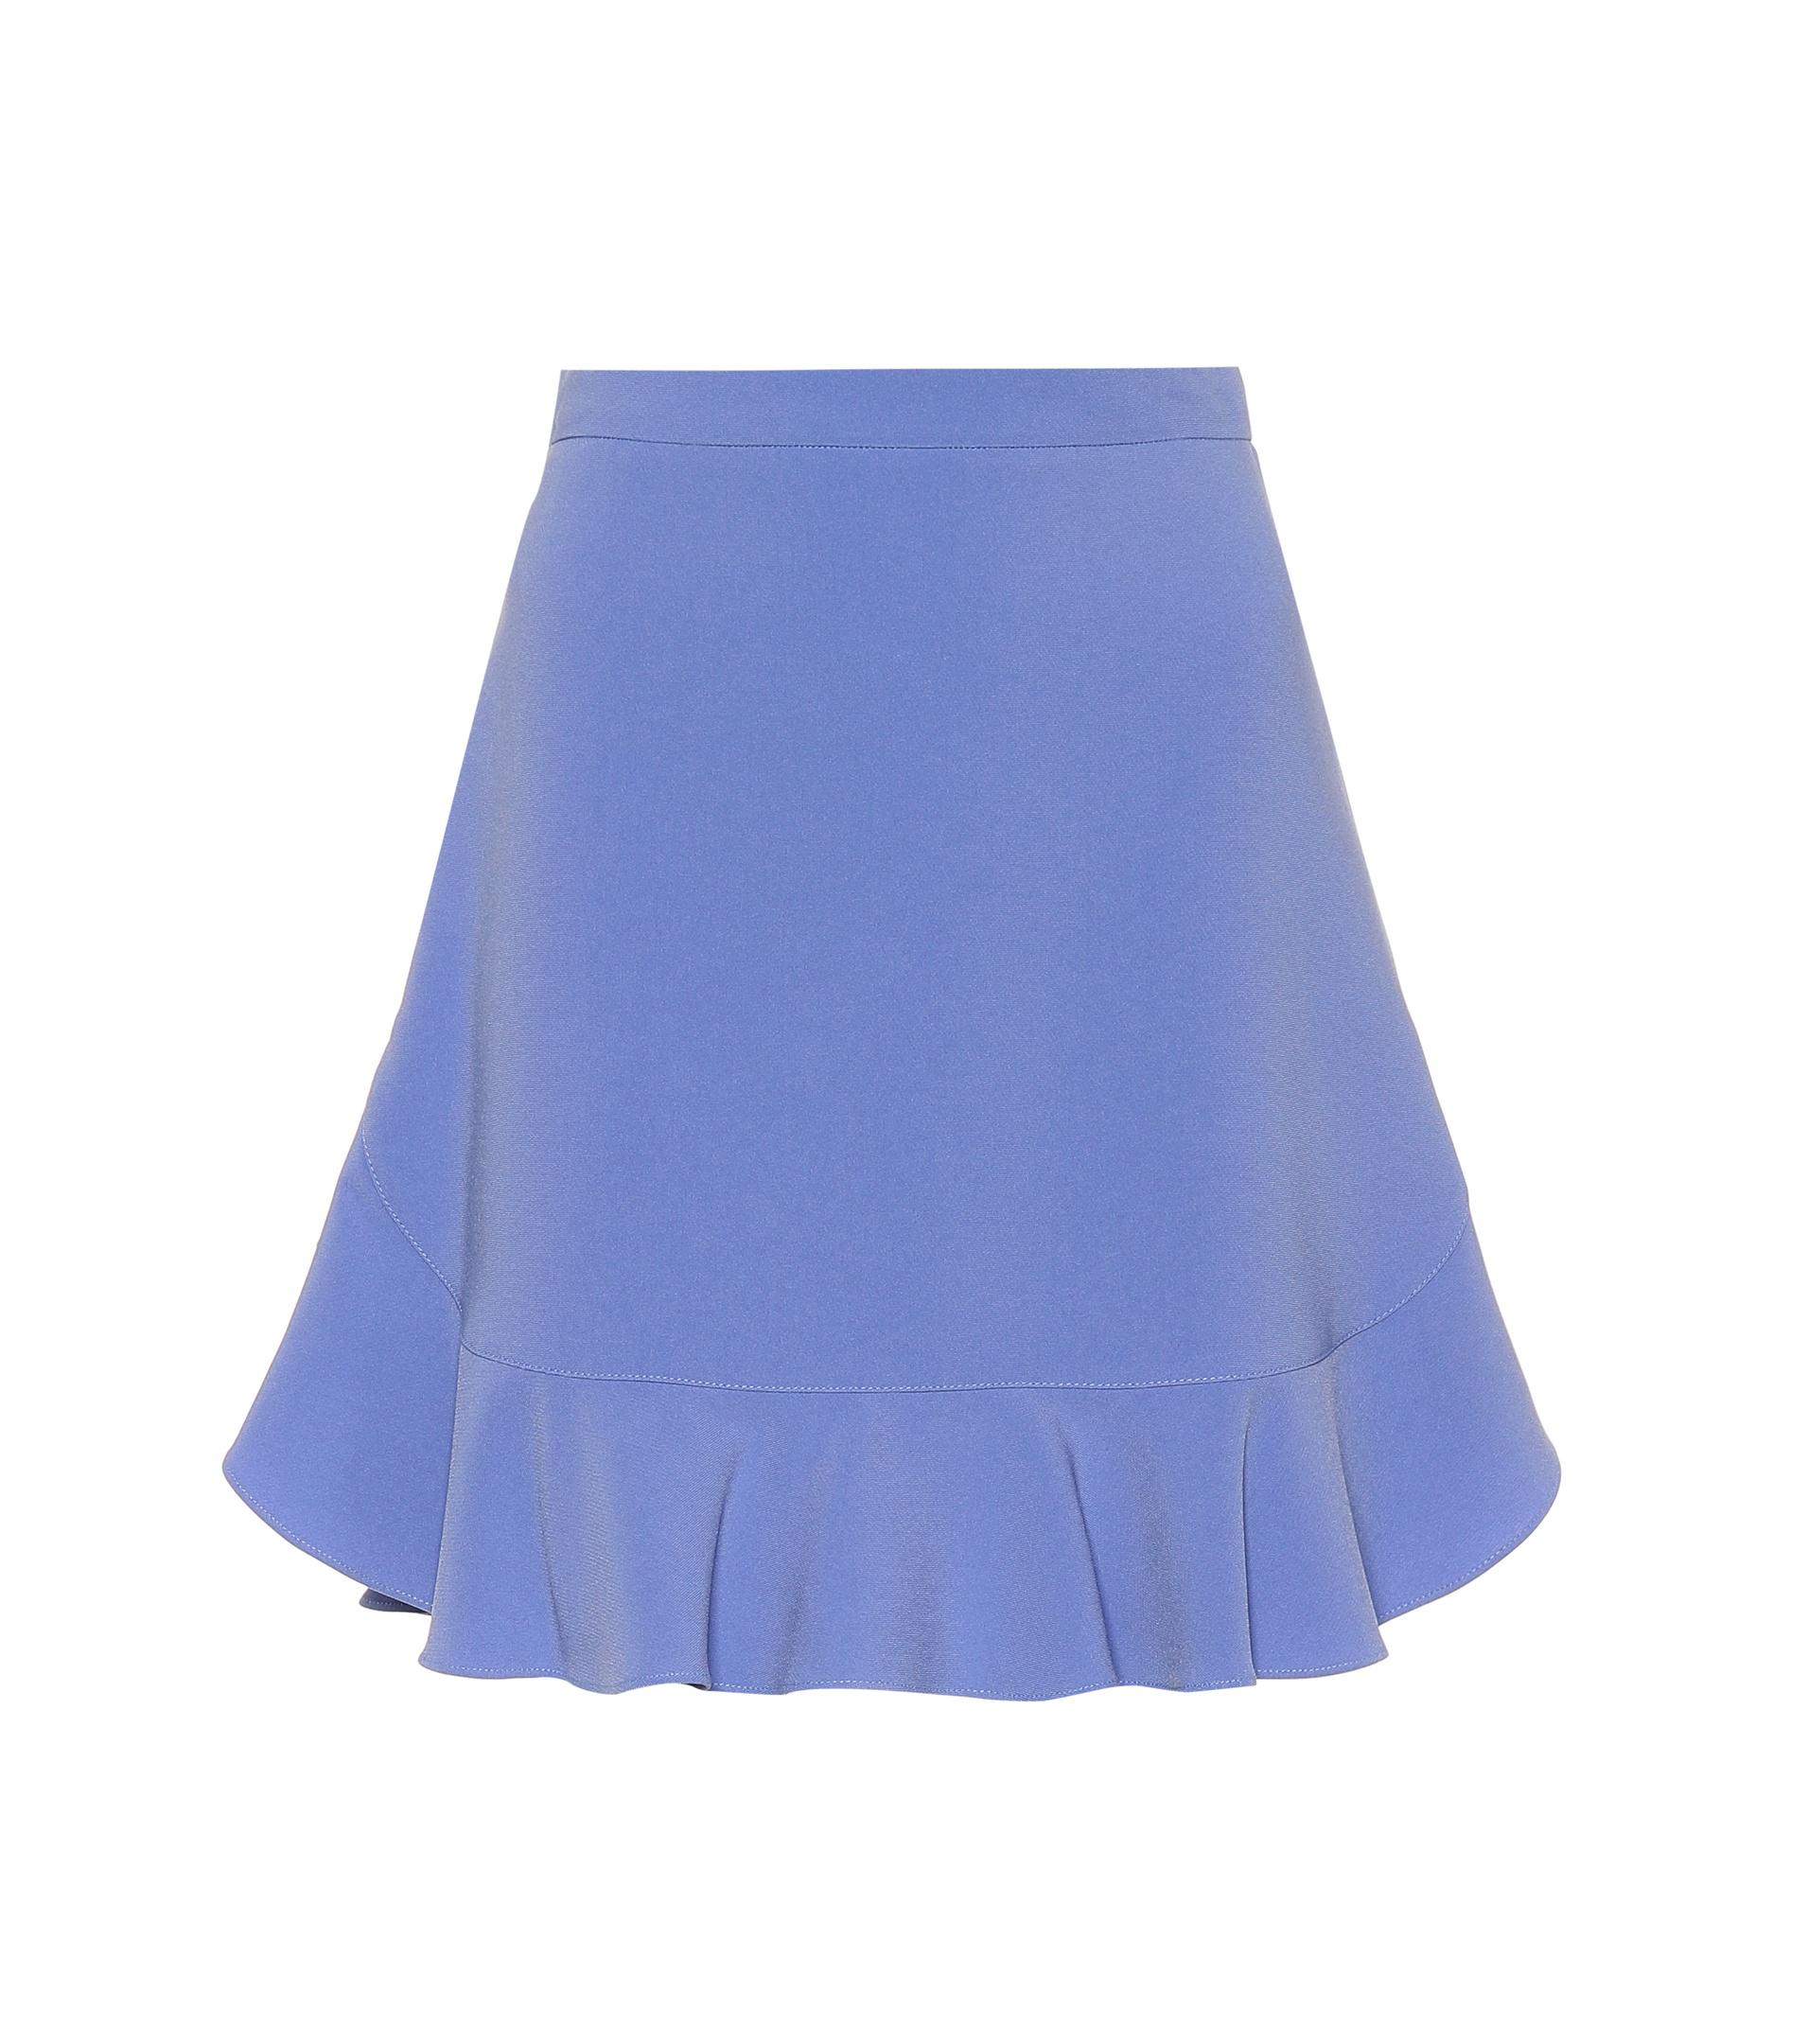 Miu Miu Flounce Flared Cady Skirt in Blue - Lyst